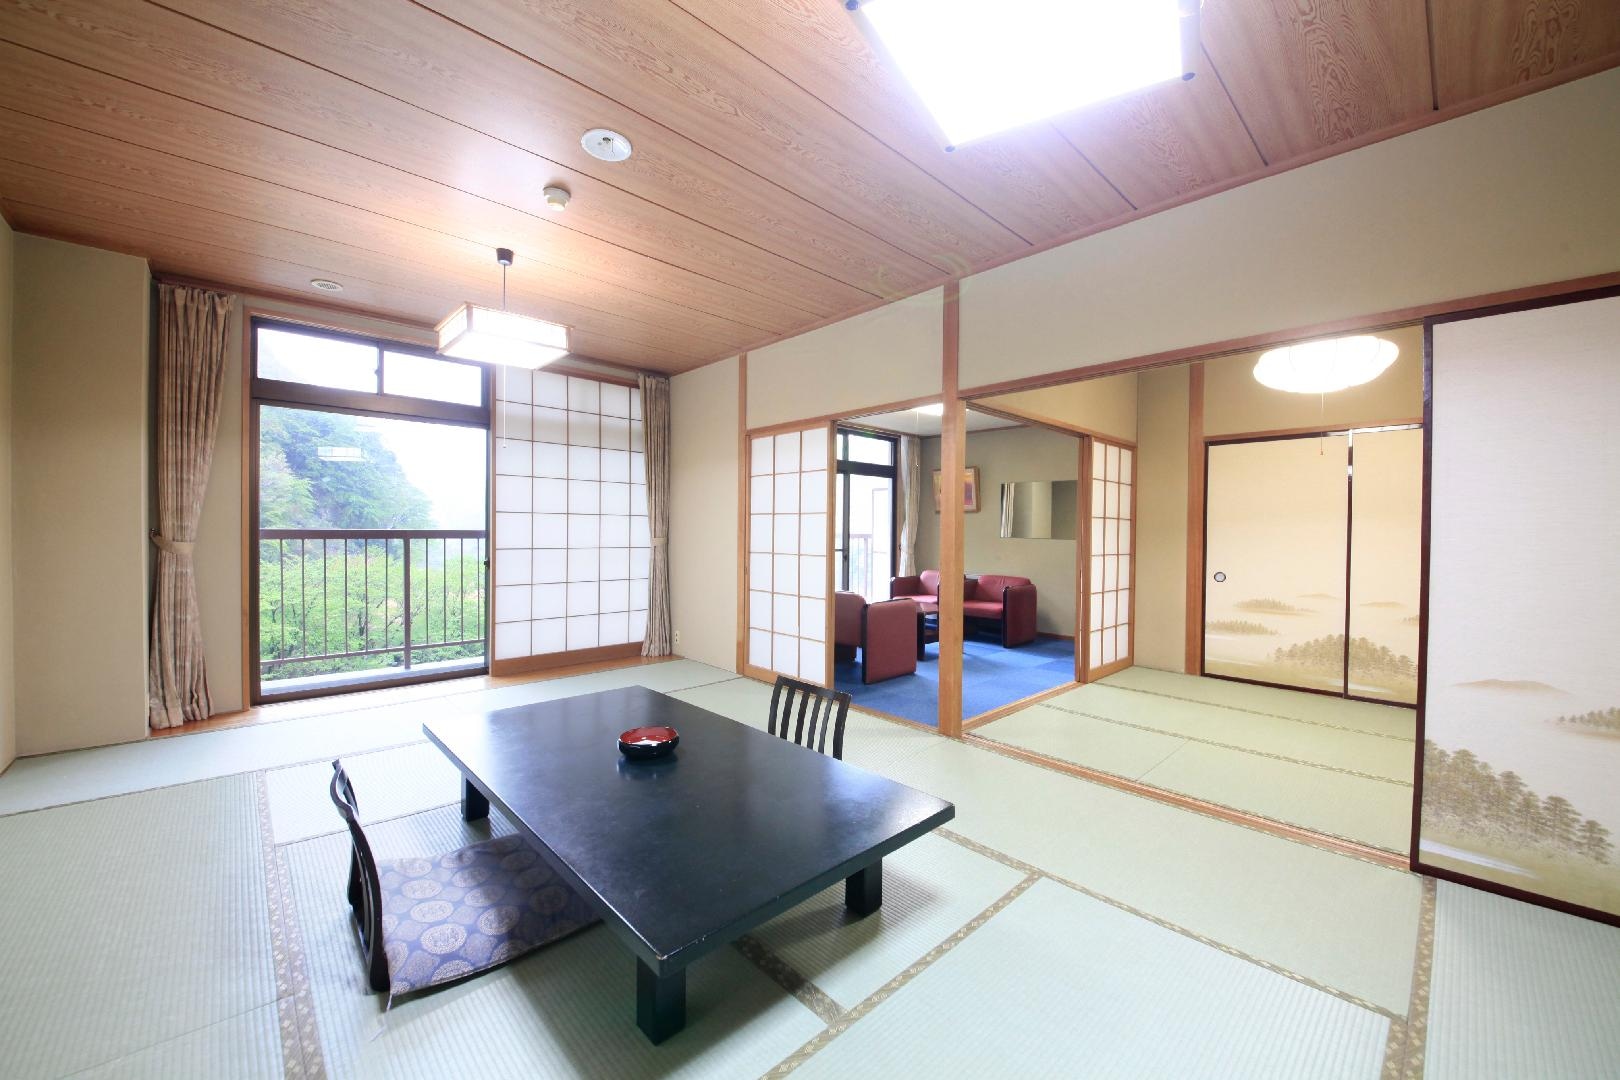 Kamar bergaya Jepang di lantai 3 12+4,5 tatami